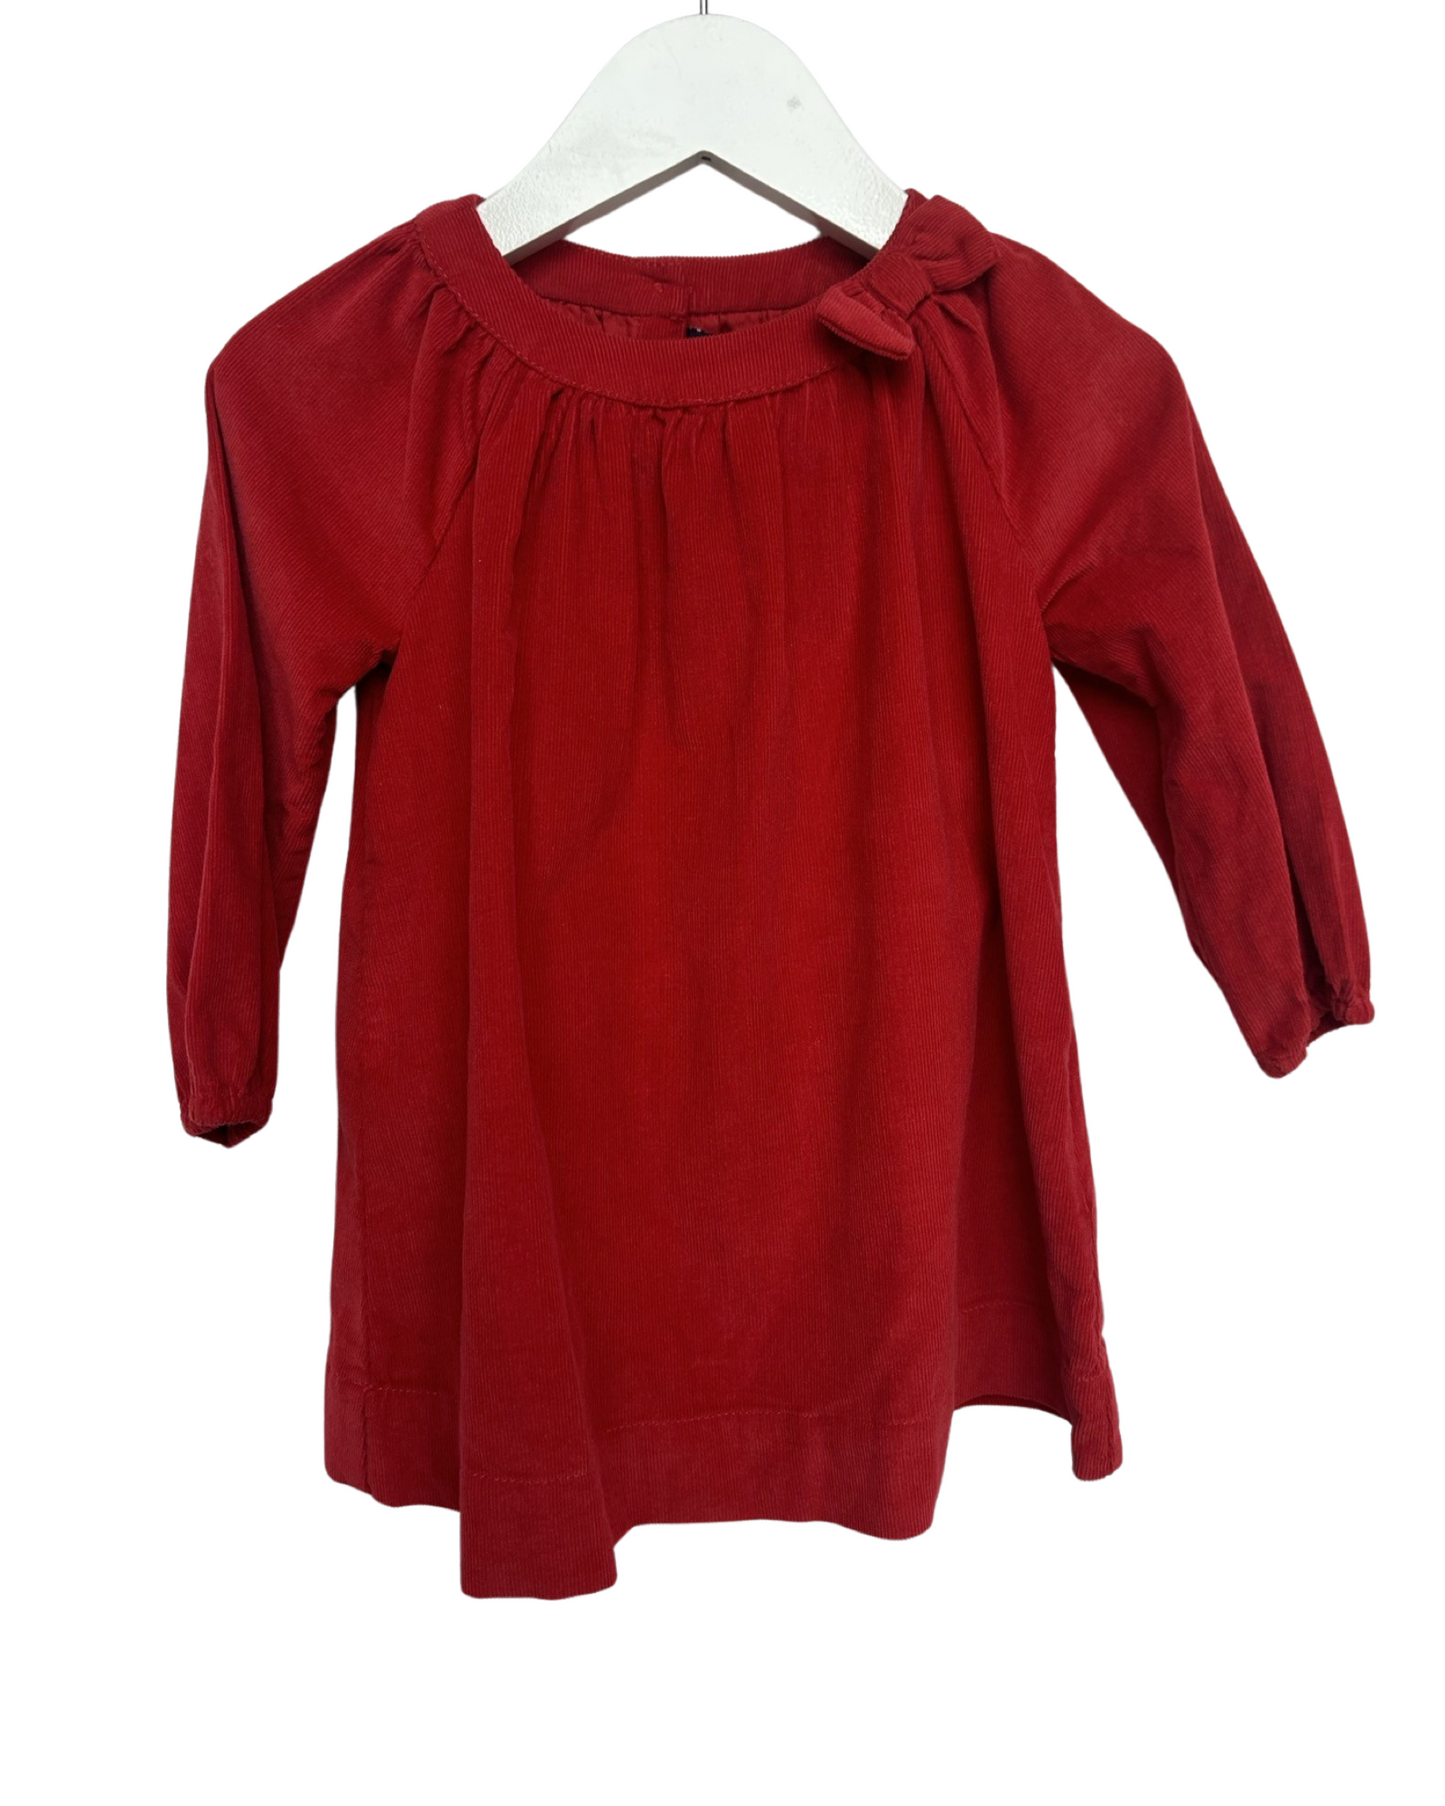 Baby Gap red needlecord dress (size 12-18mths)